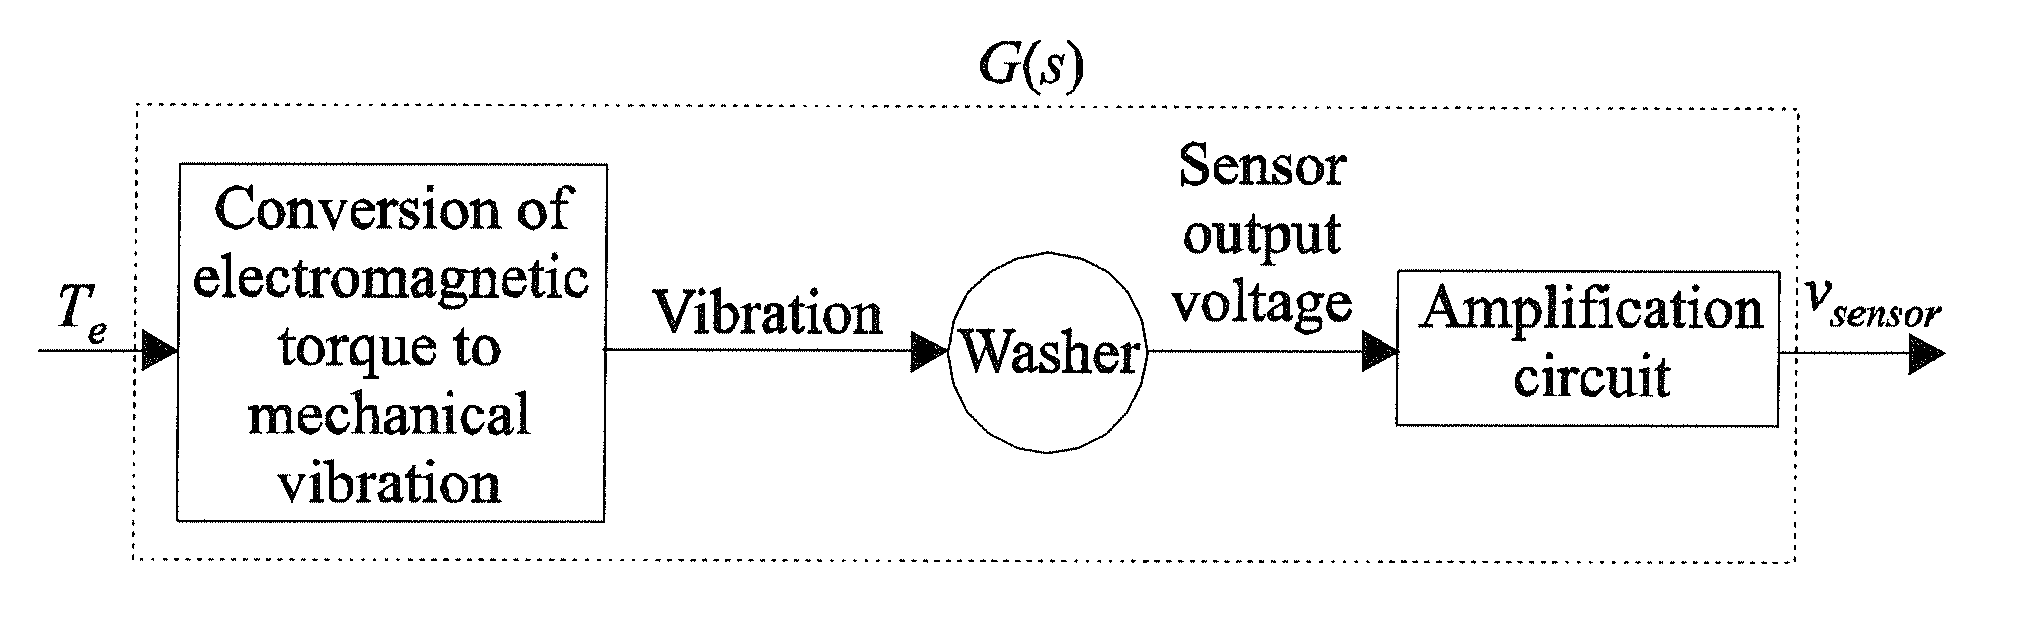 Rotor position sensing apparatus and method using piezoelectric sensor and hall-effect sensor